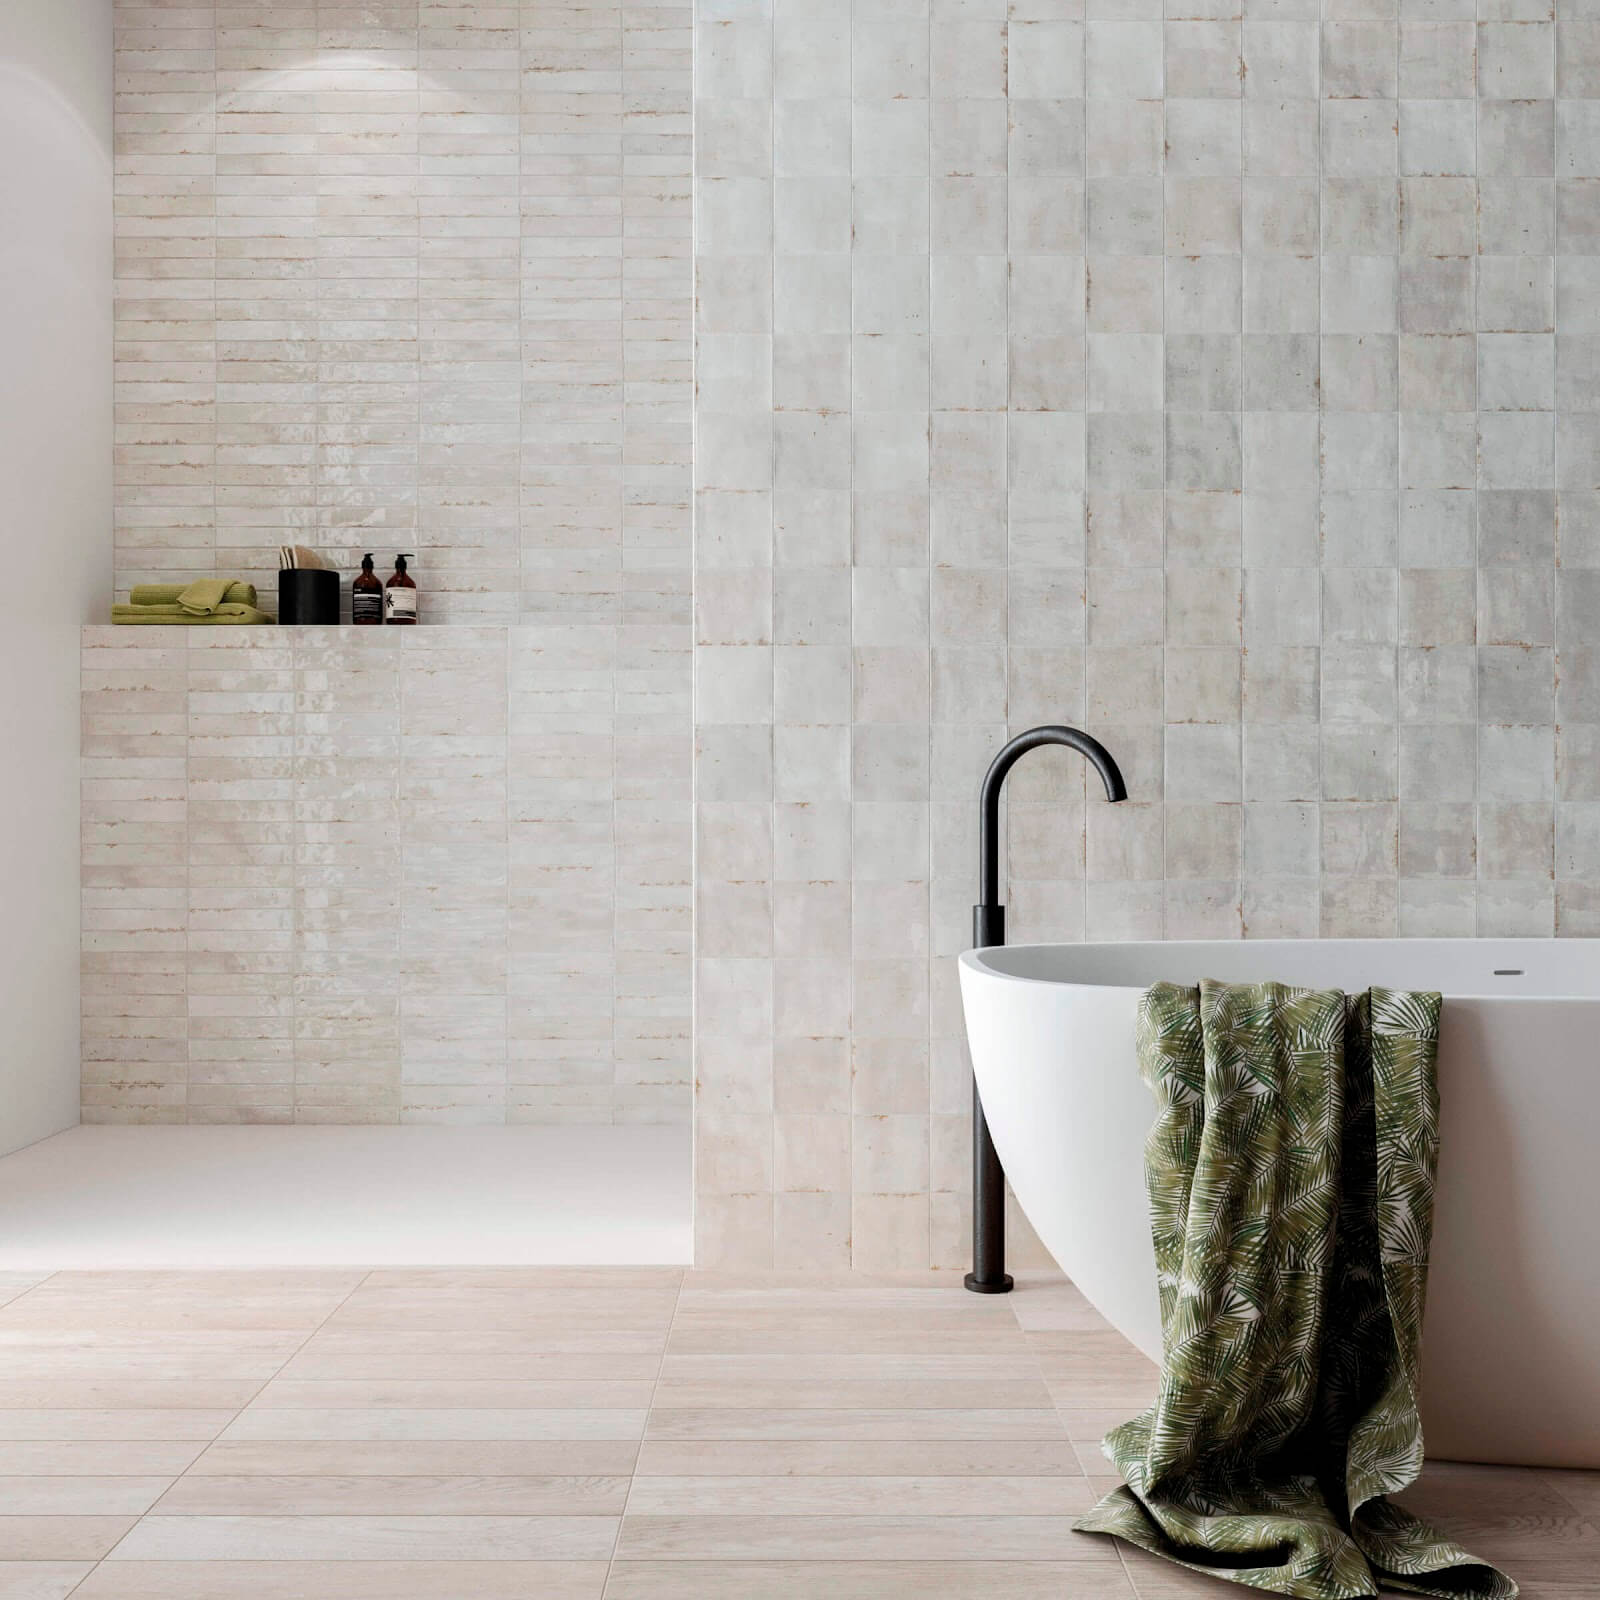 cream bath with organic texture and handmade tiles